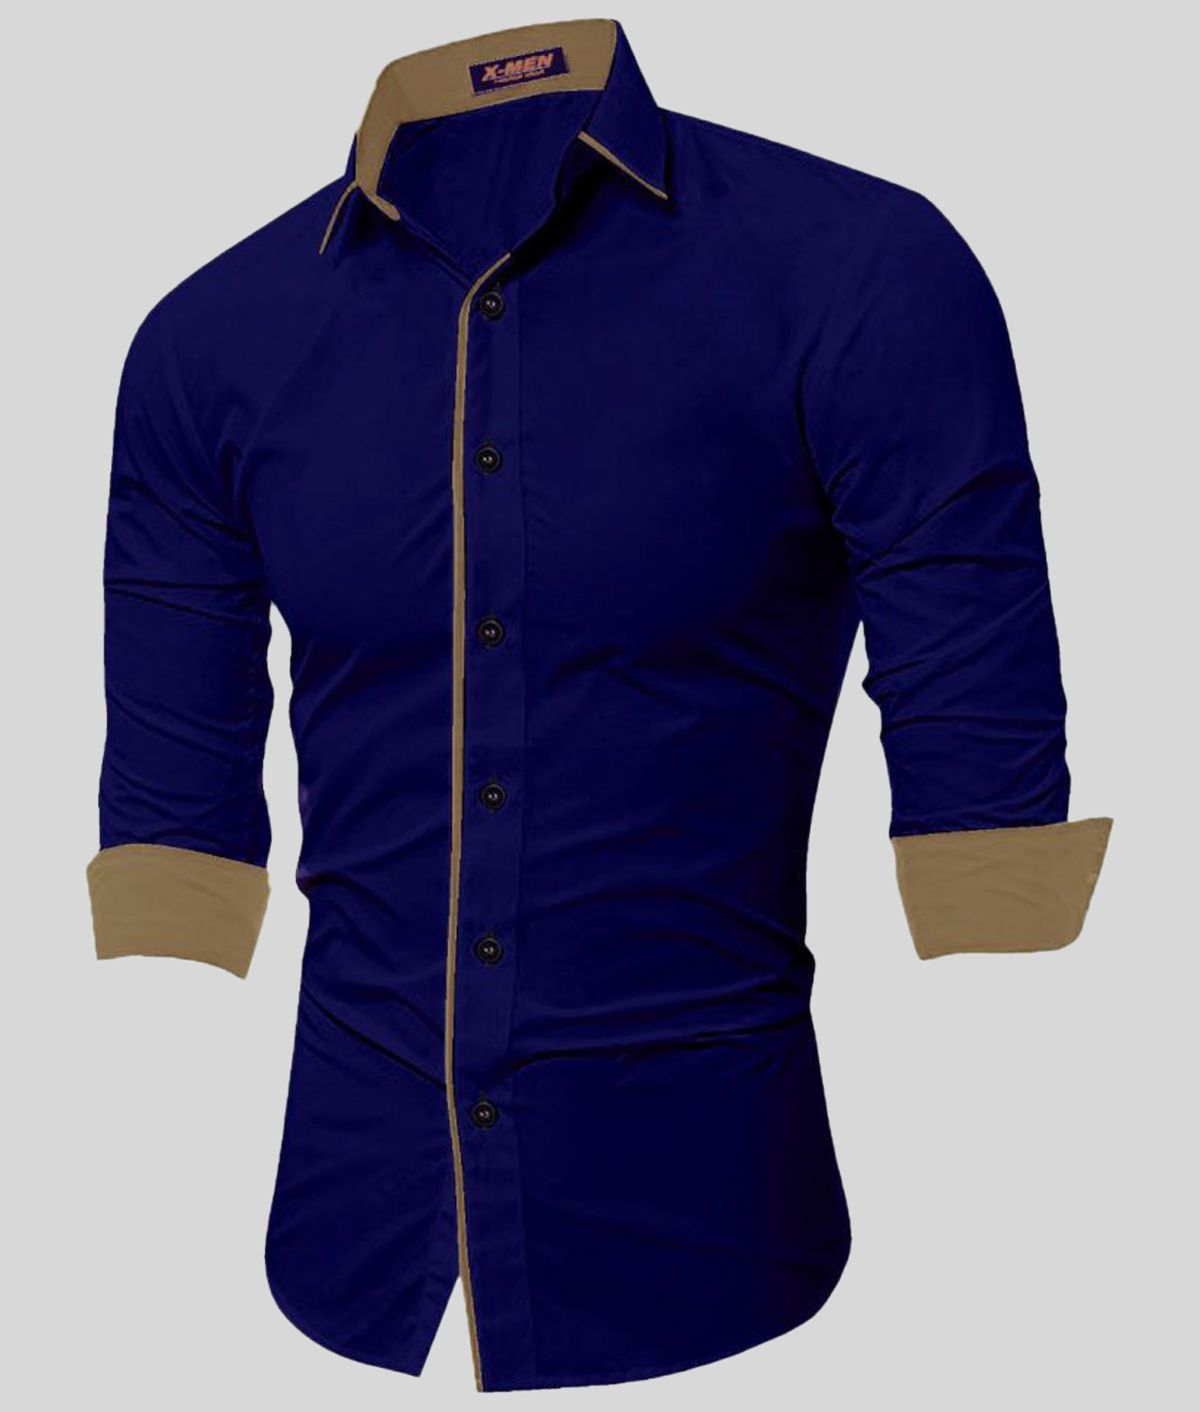 P&V - Blue Cotton Slim Fit Men's Casual Shirt (Pack of 1 )